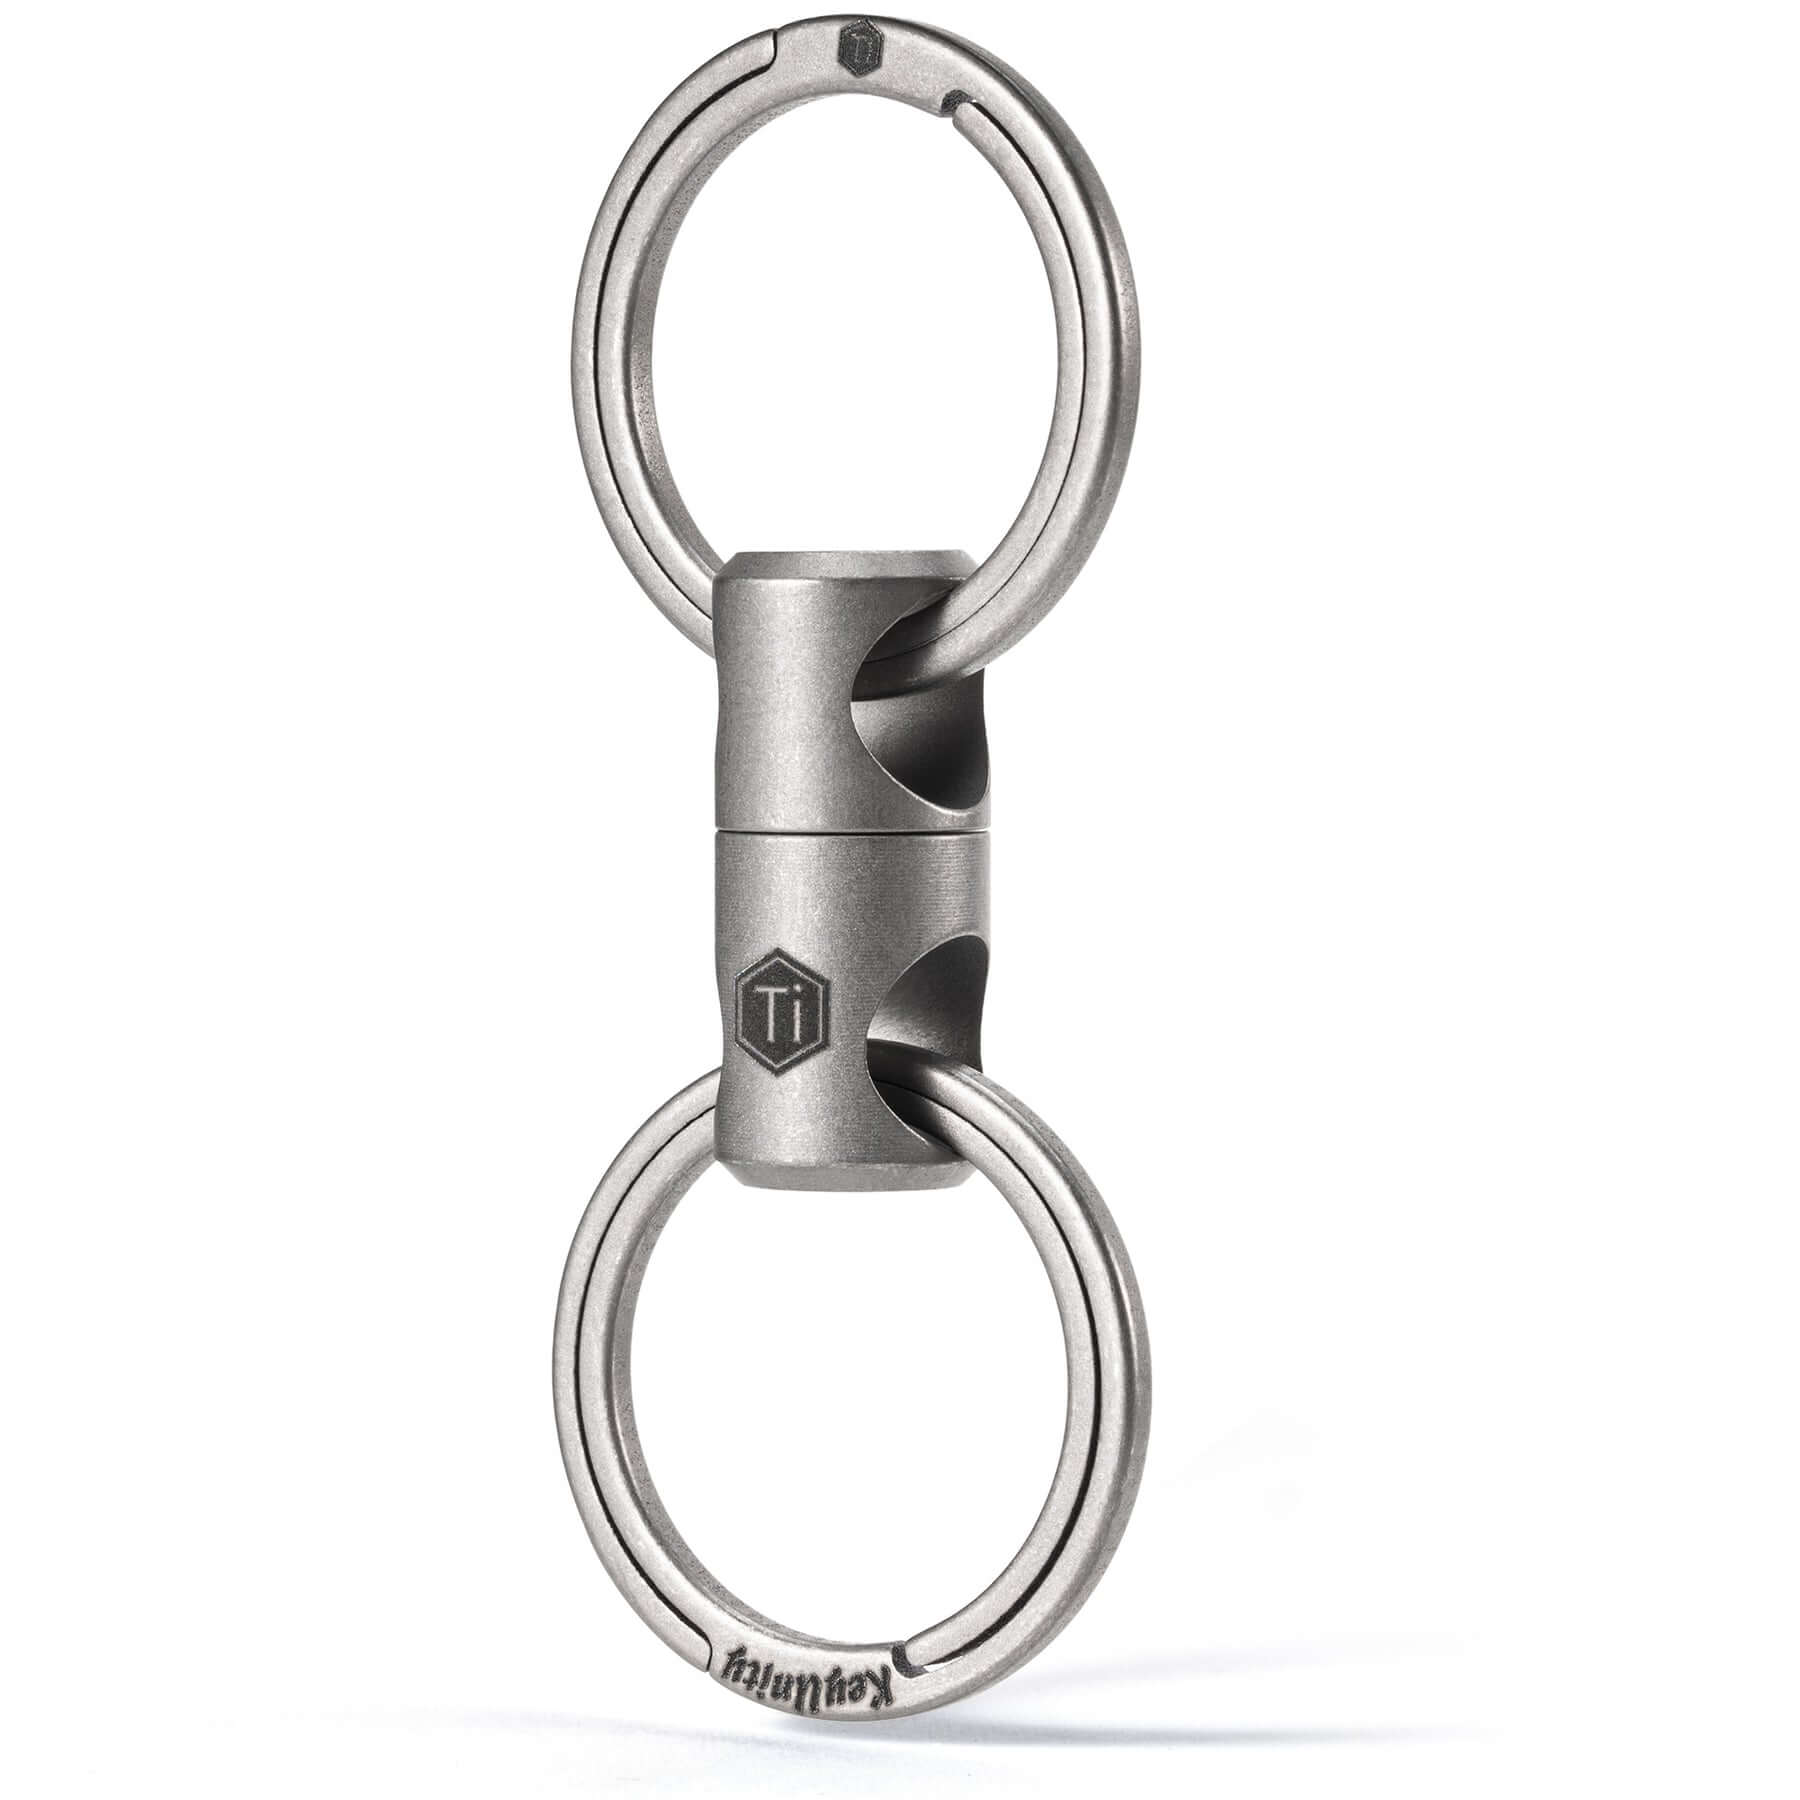 KeyUnity Titanium Swivel Key Chain Rings, Rotatable Key Organizer